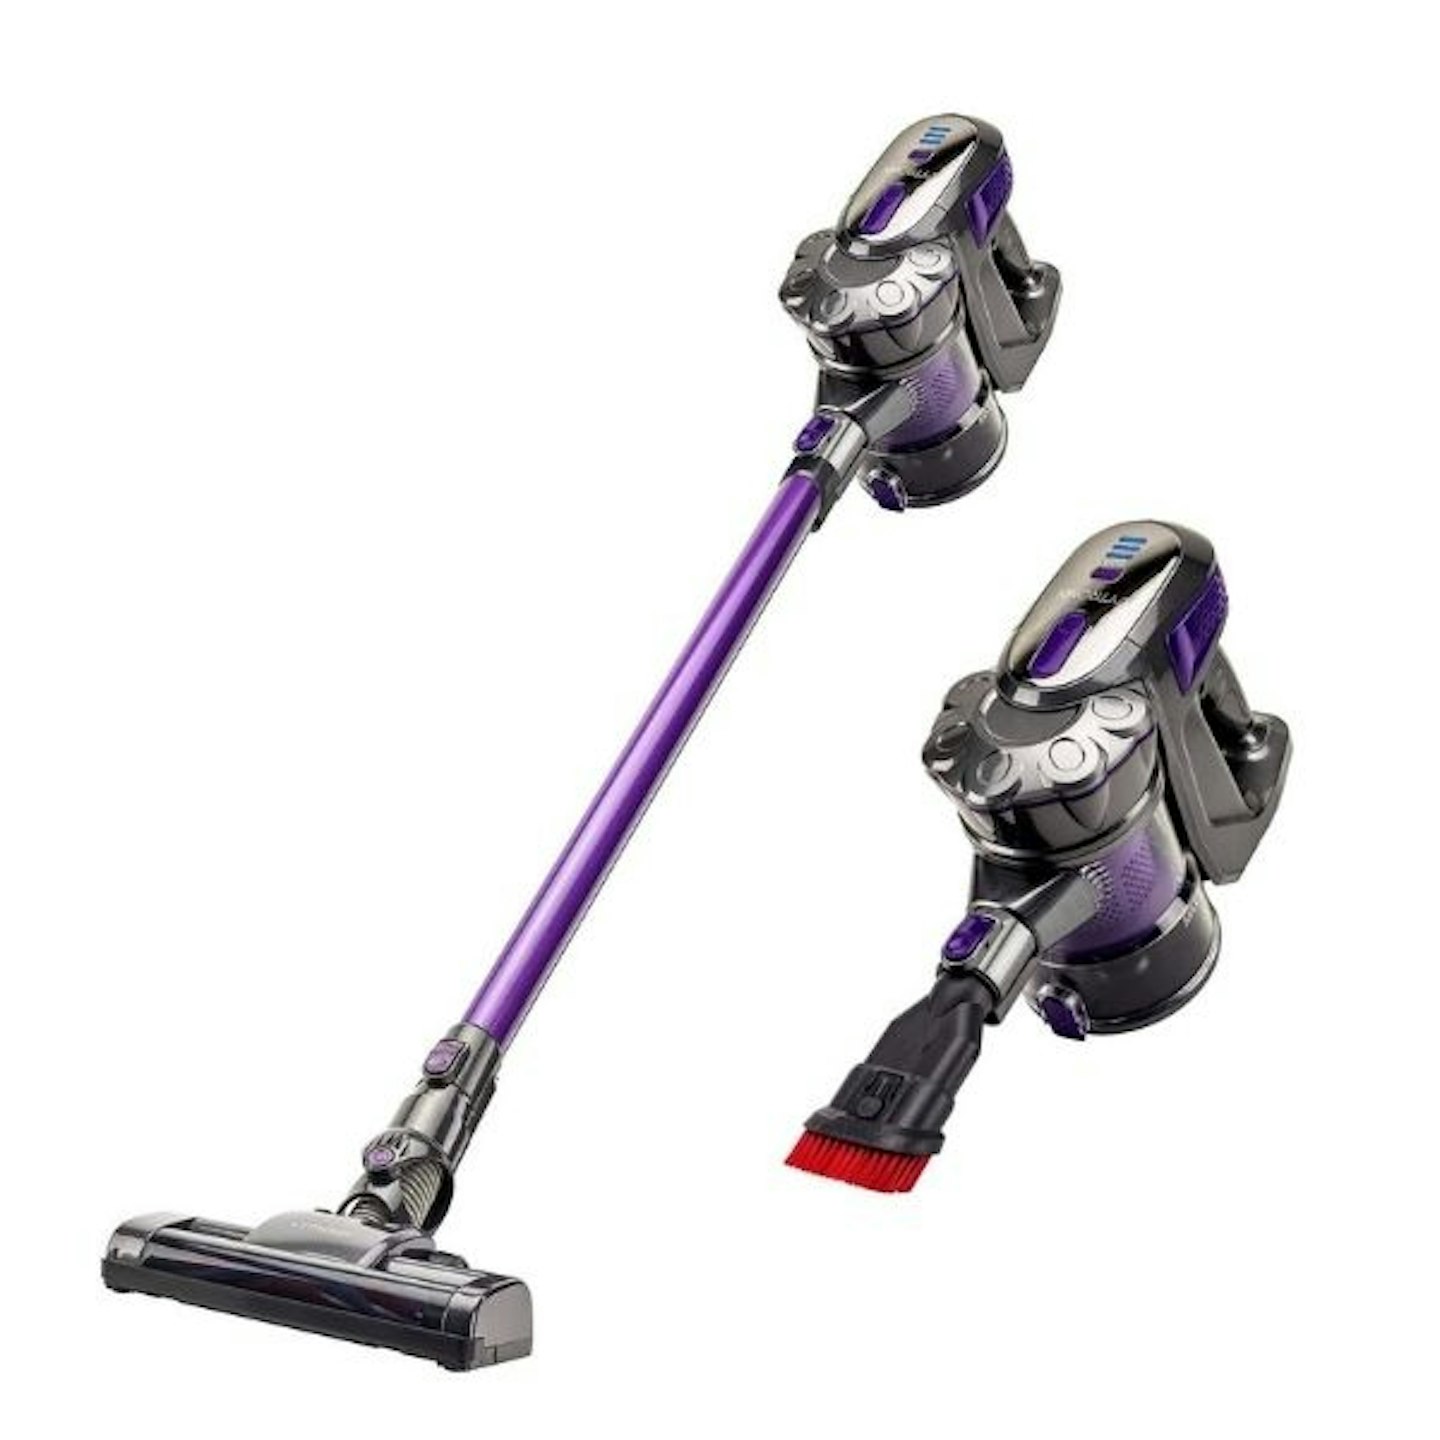 VYTRONIX Powerful Cordless Upright Handheld Stick Vacuum